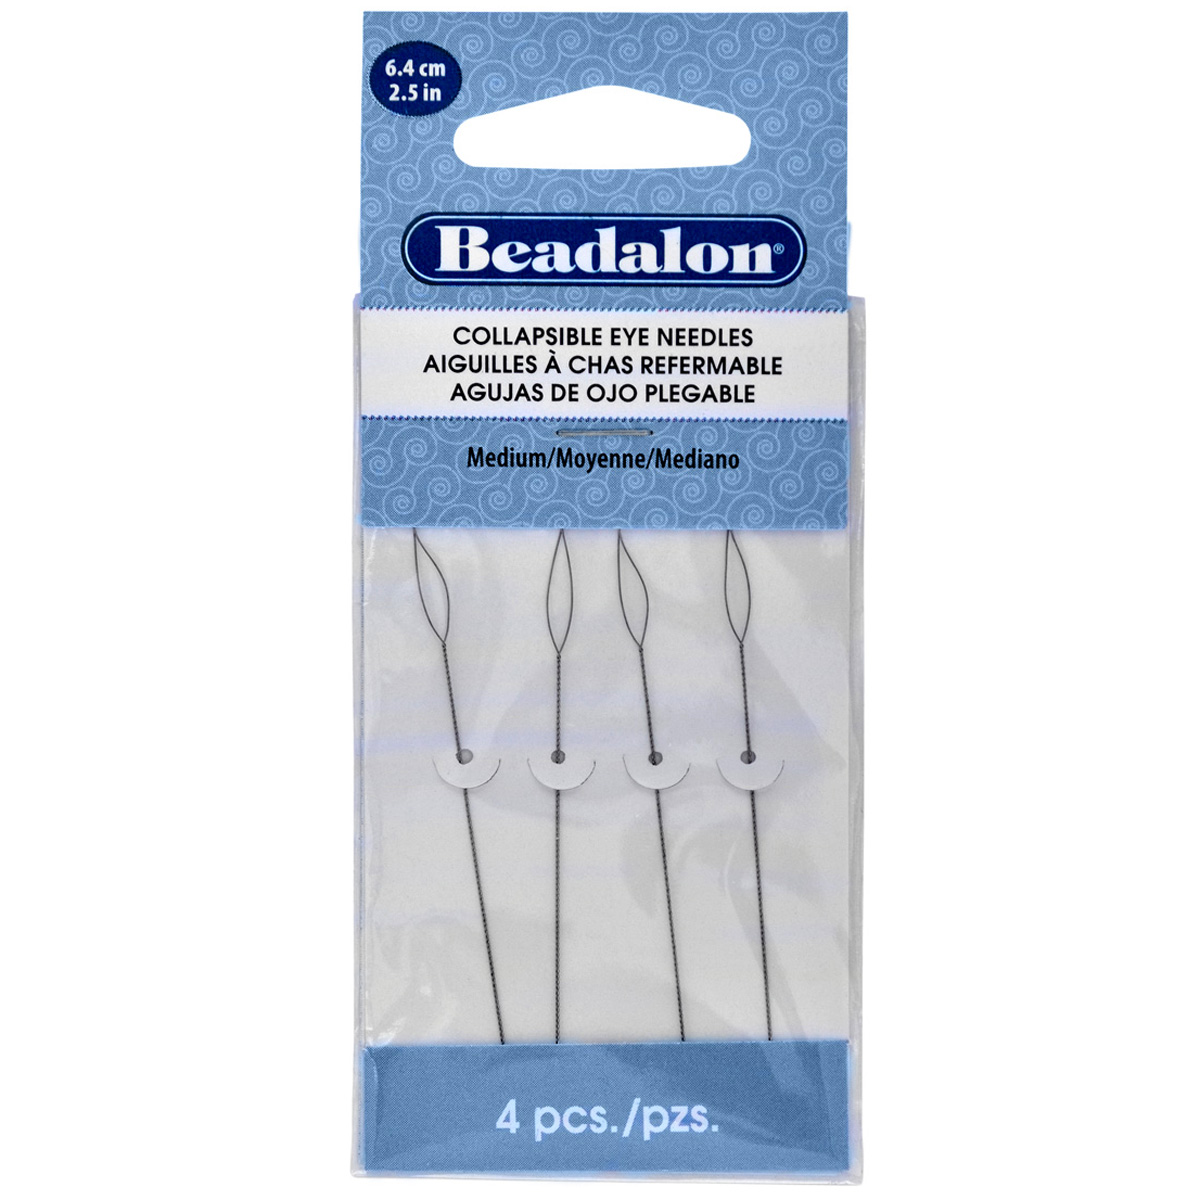 Where To Buy Beadalon Collapsible Eye Needles 10